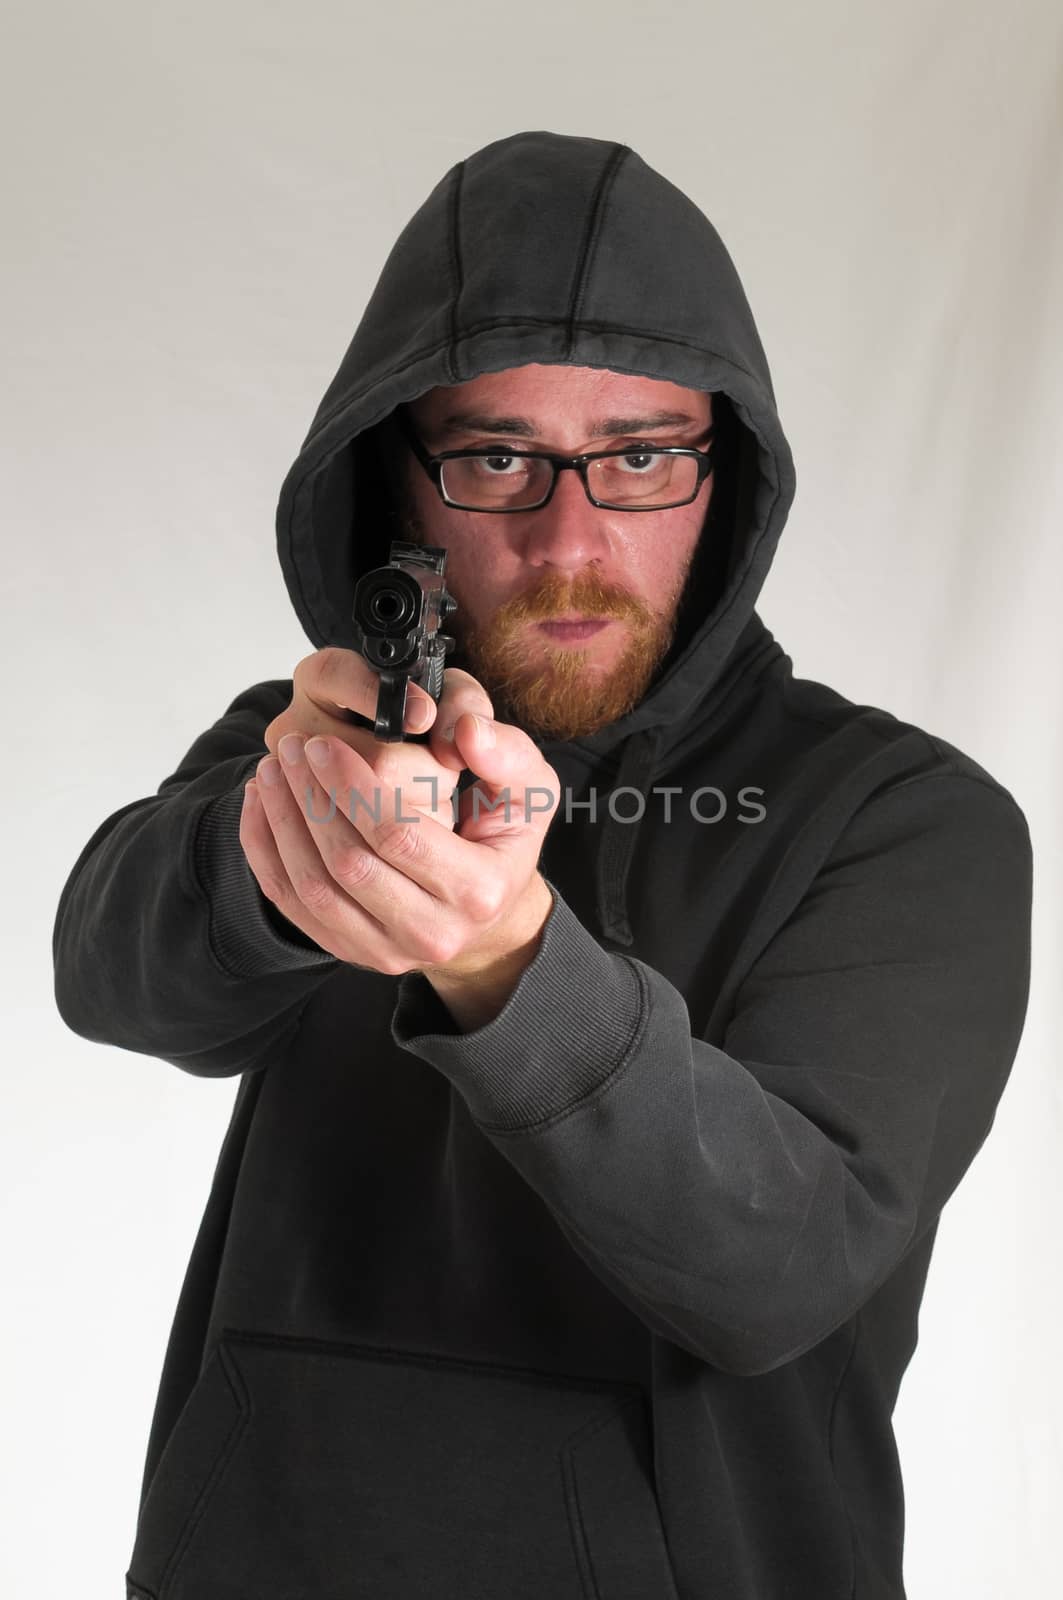 Man Holding a Pistol Gun by underworld